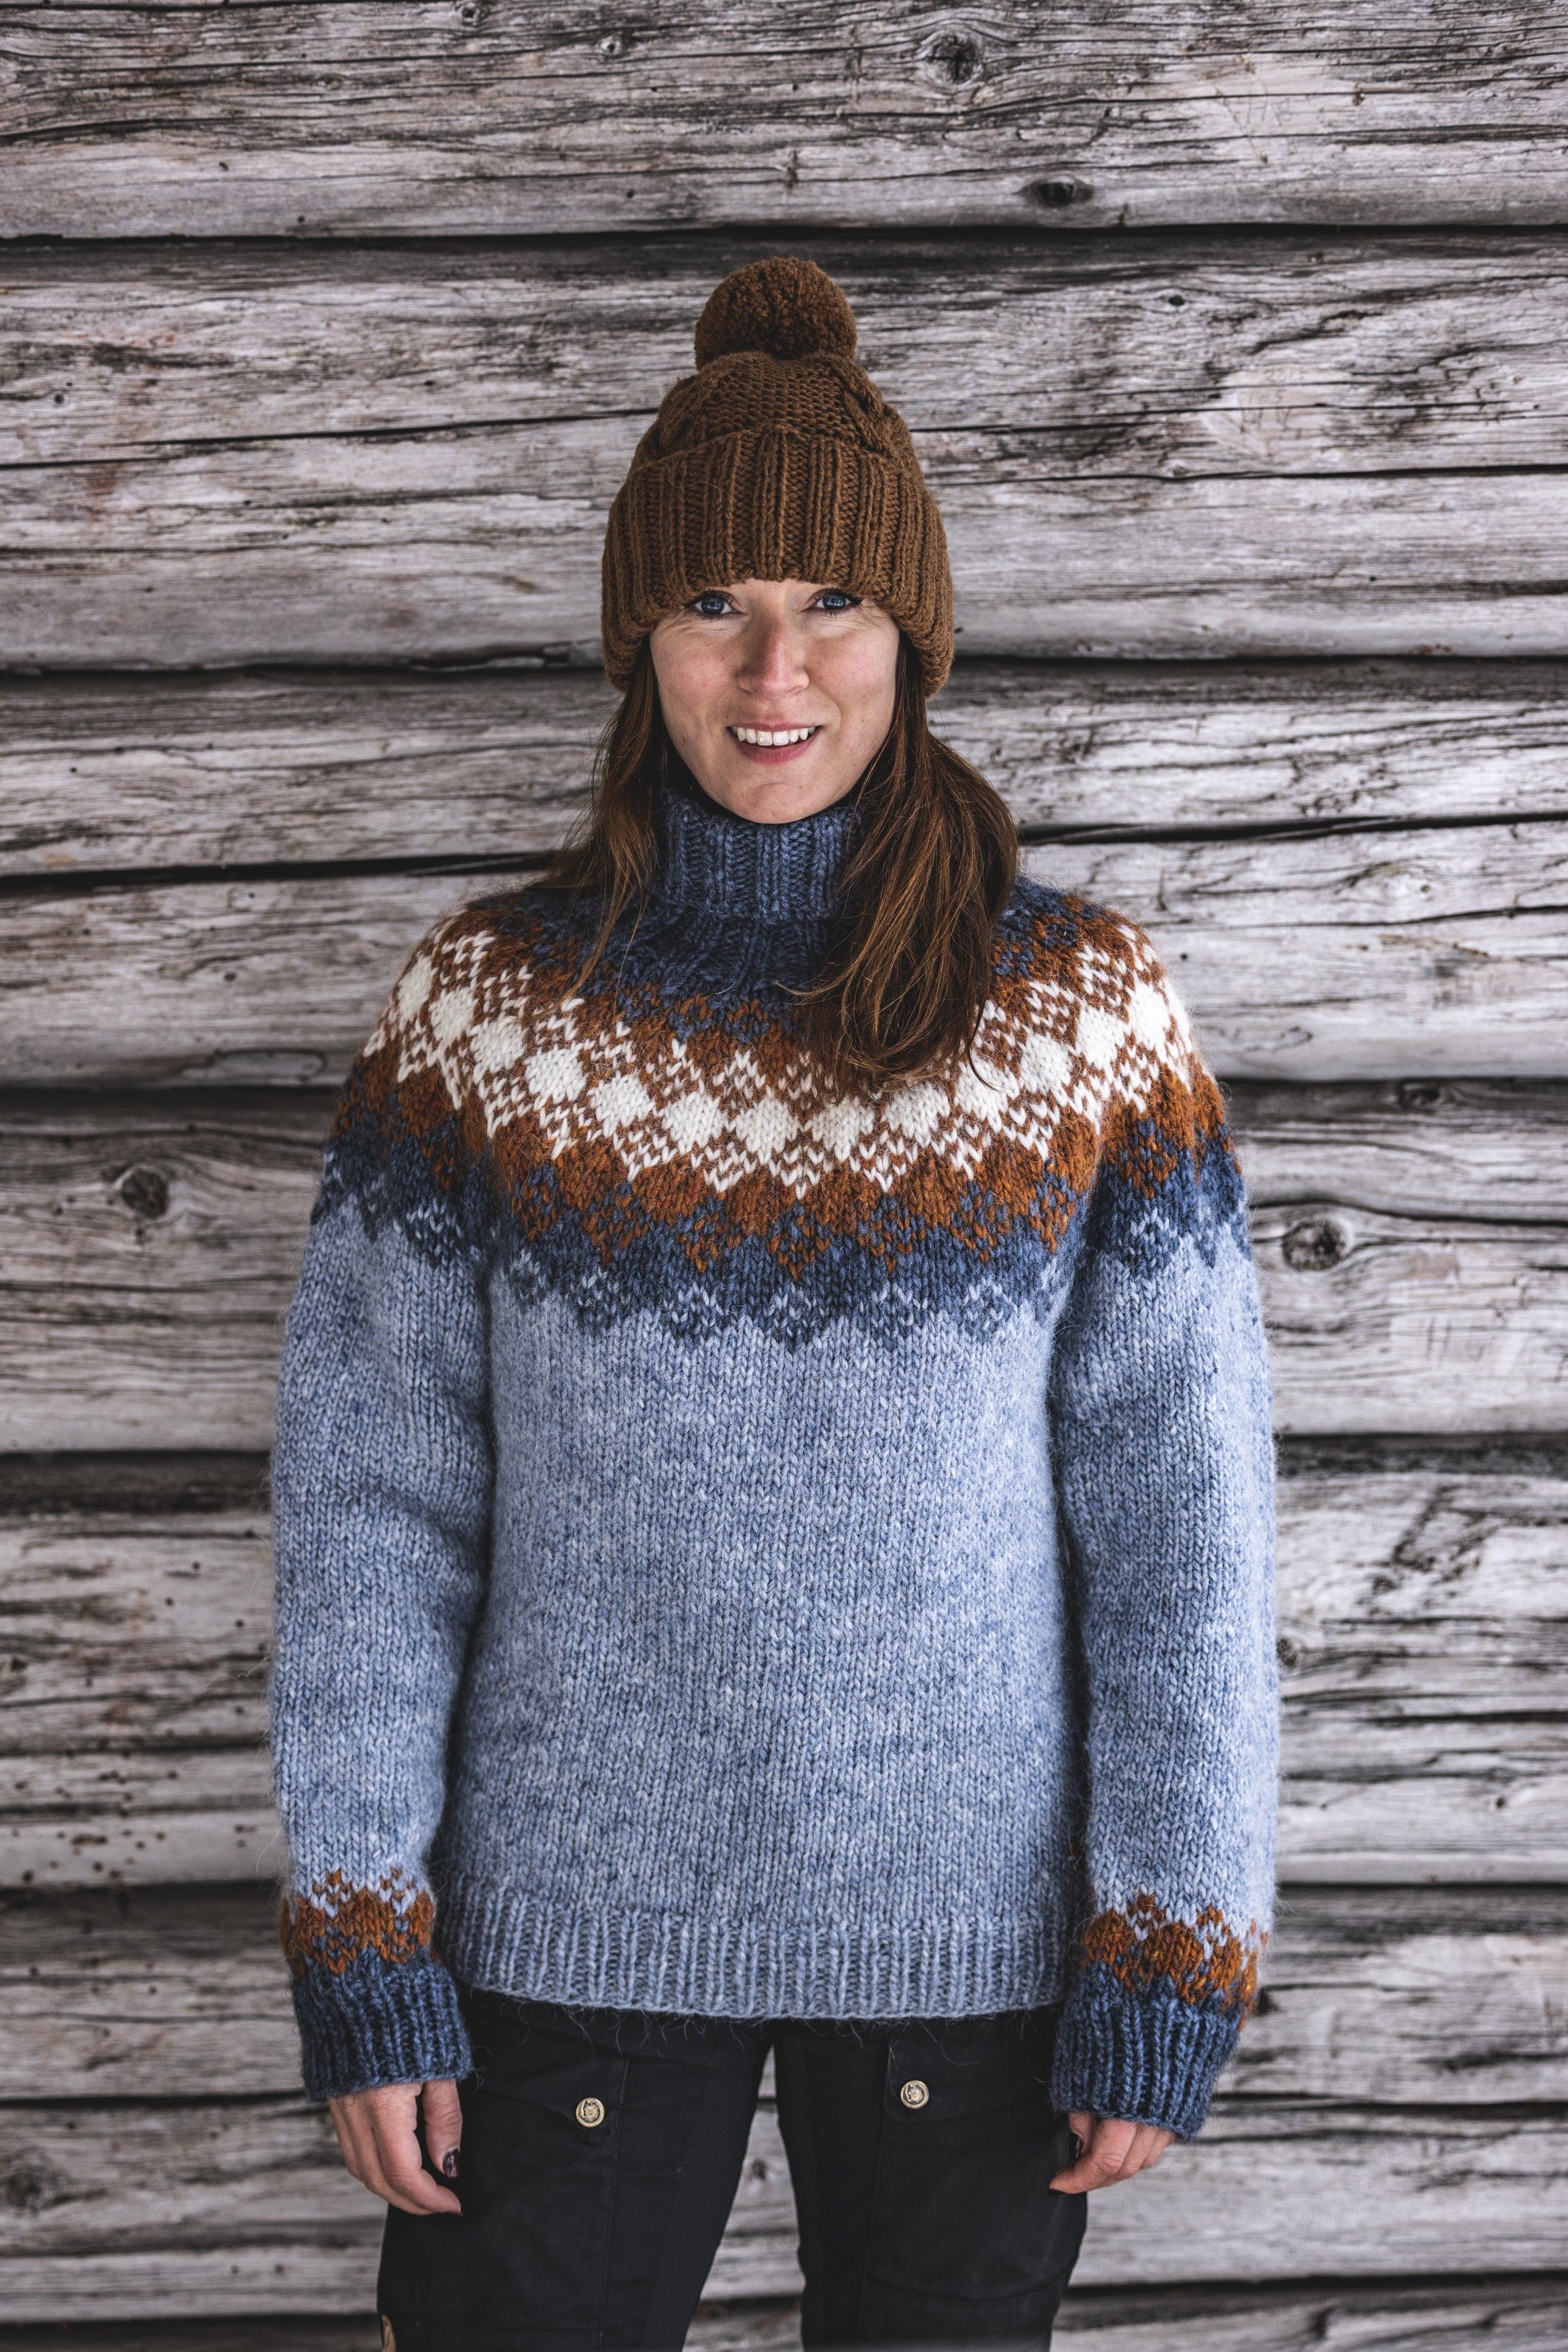 Hiutaleneule Ash Heather - Wool sweater knitting kit - The Icelandic Store